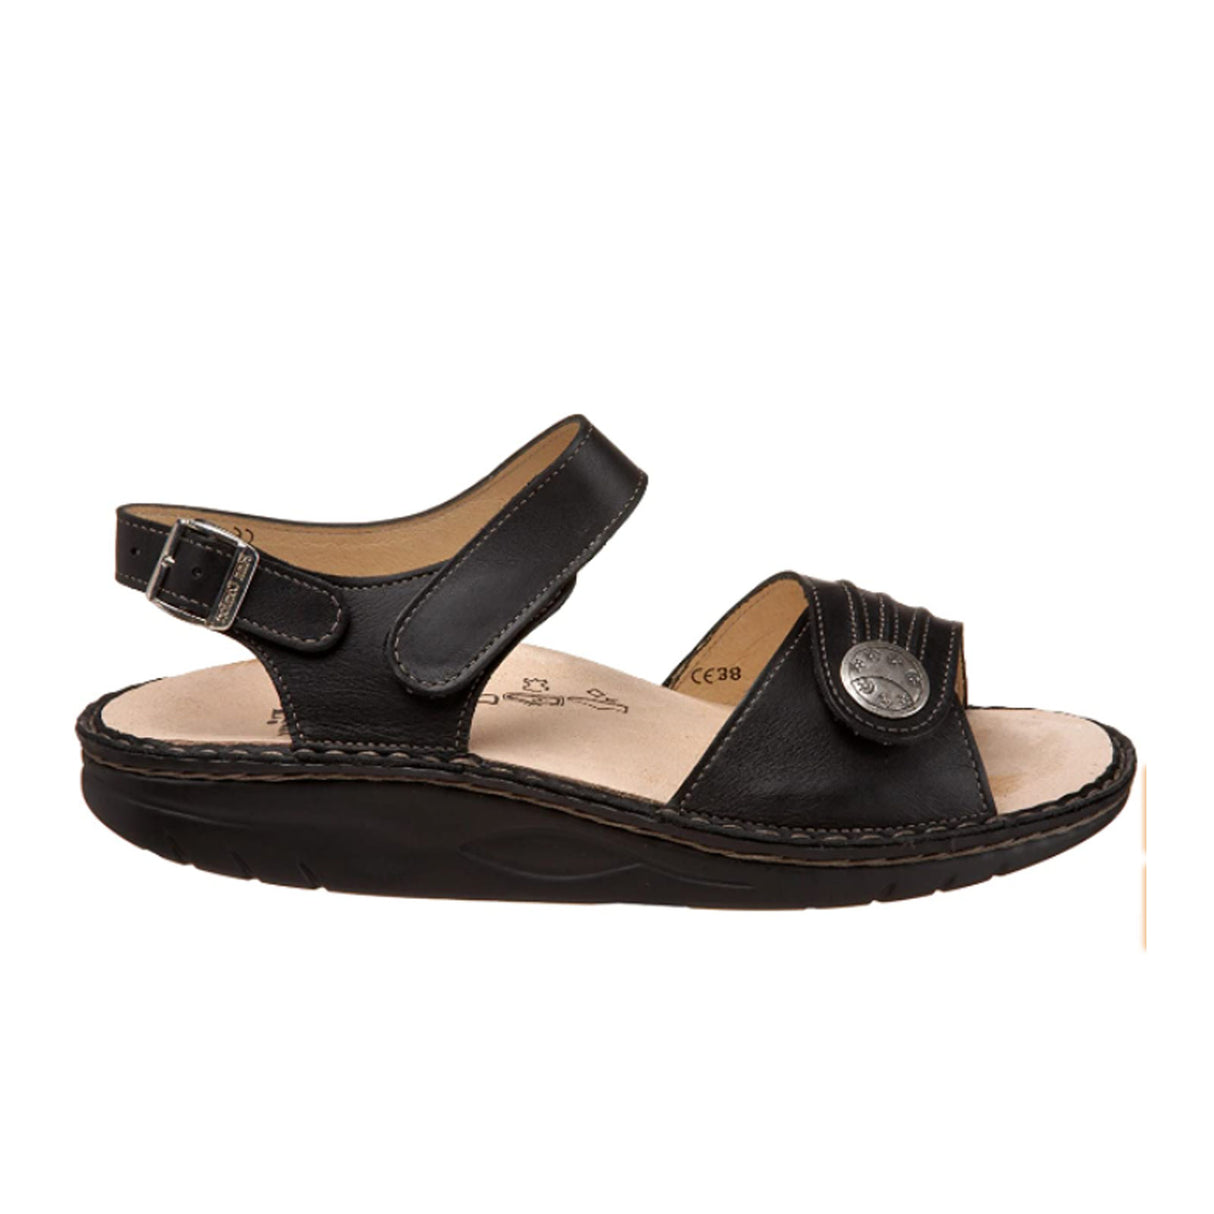 Finn Comfort Sausalito Backstrap Sandal (Women) - Schwarz Nappaseda Sandals - Backstrap - The Heel Shoe Fitters